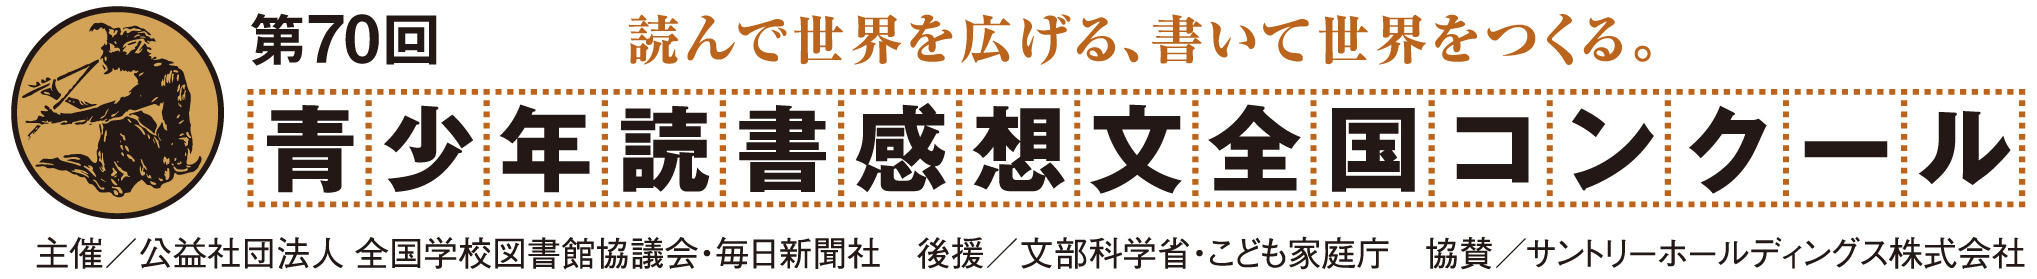 70kansoubun-logo-4c.jpg